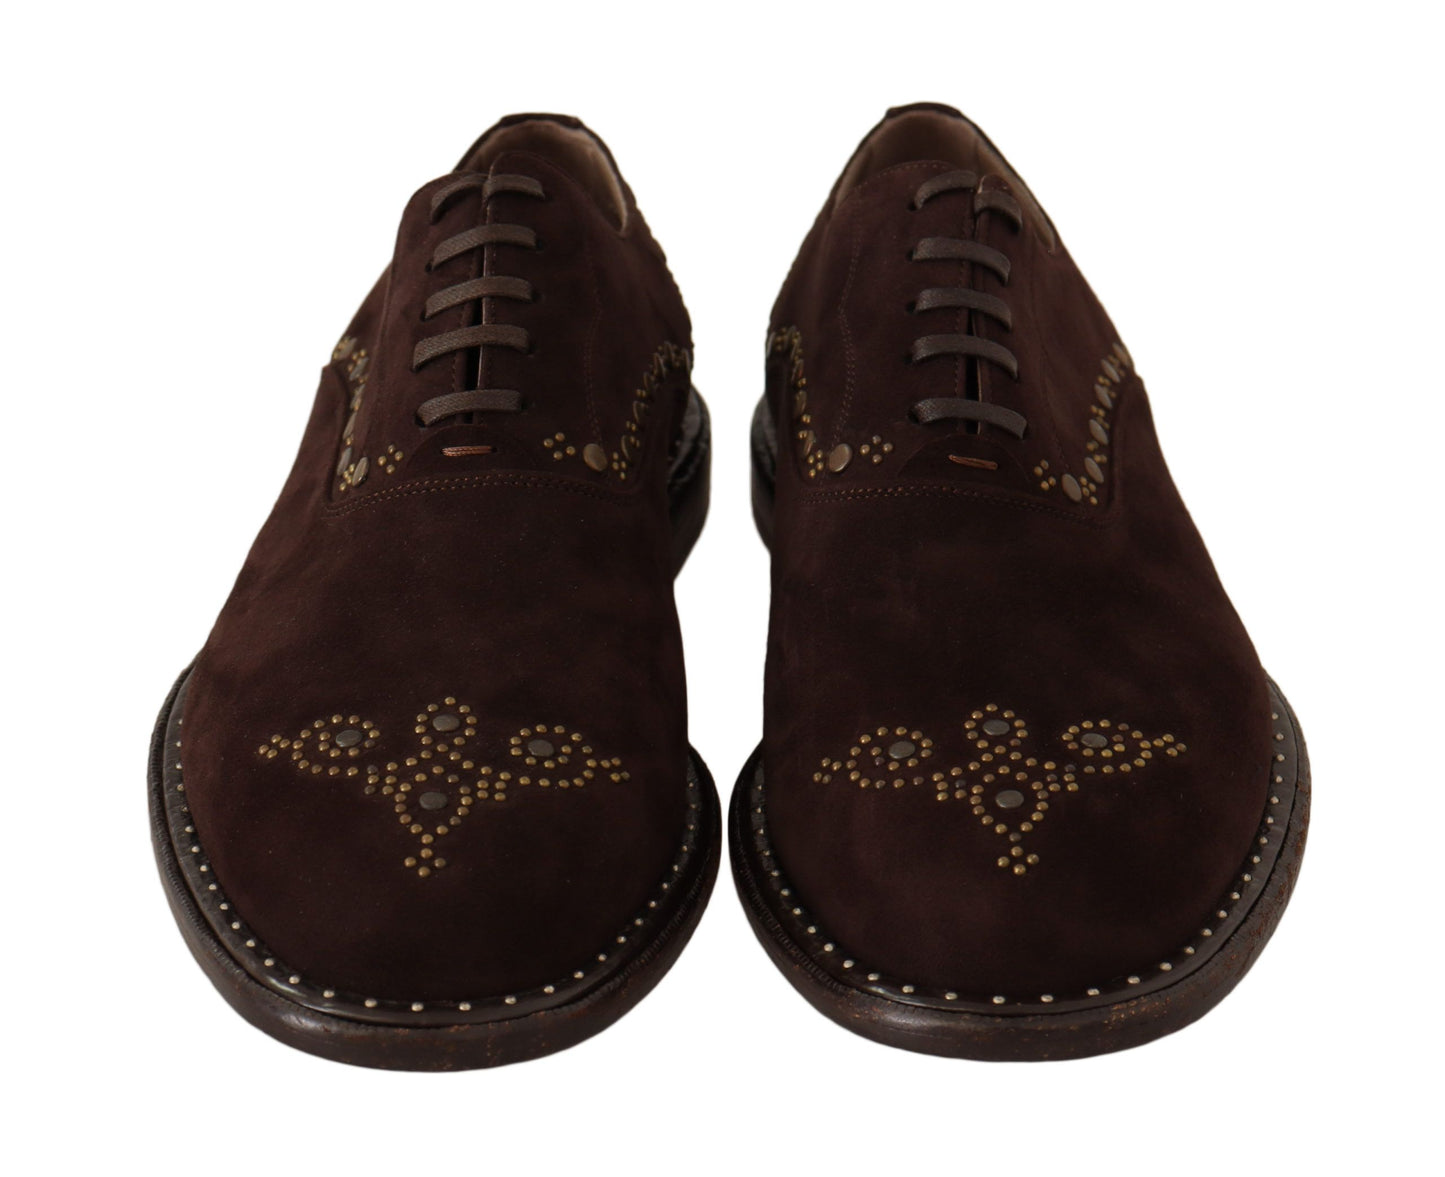 Dolce & Gabbana Elegant Brown Suede Studded Derby Shoes